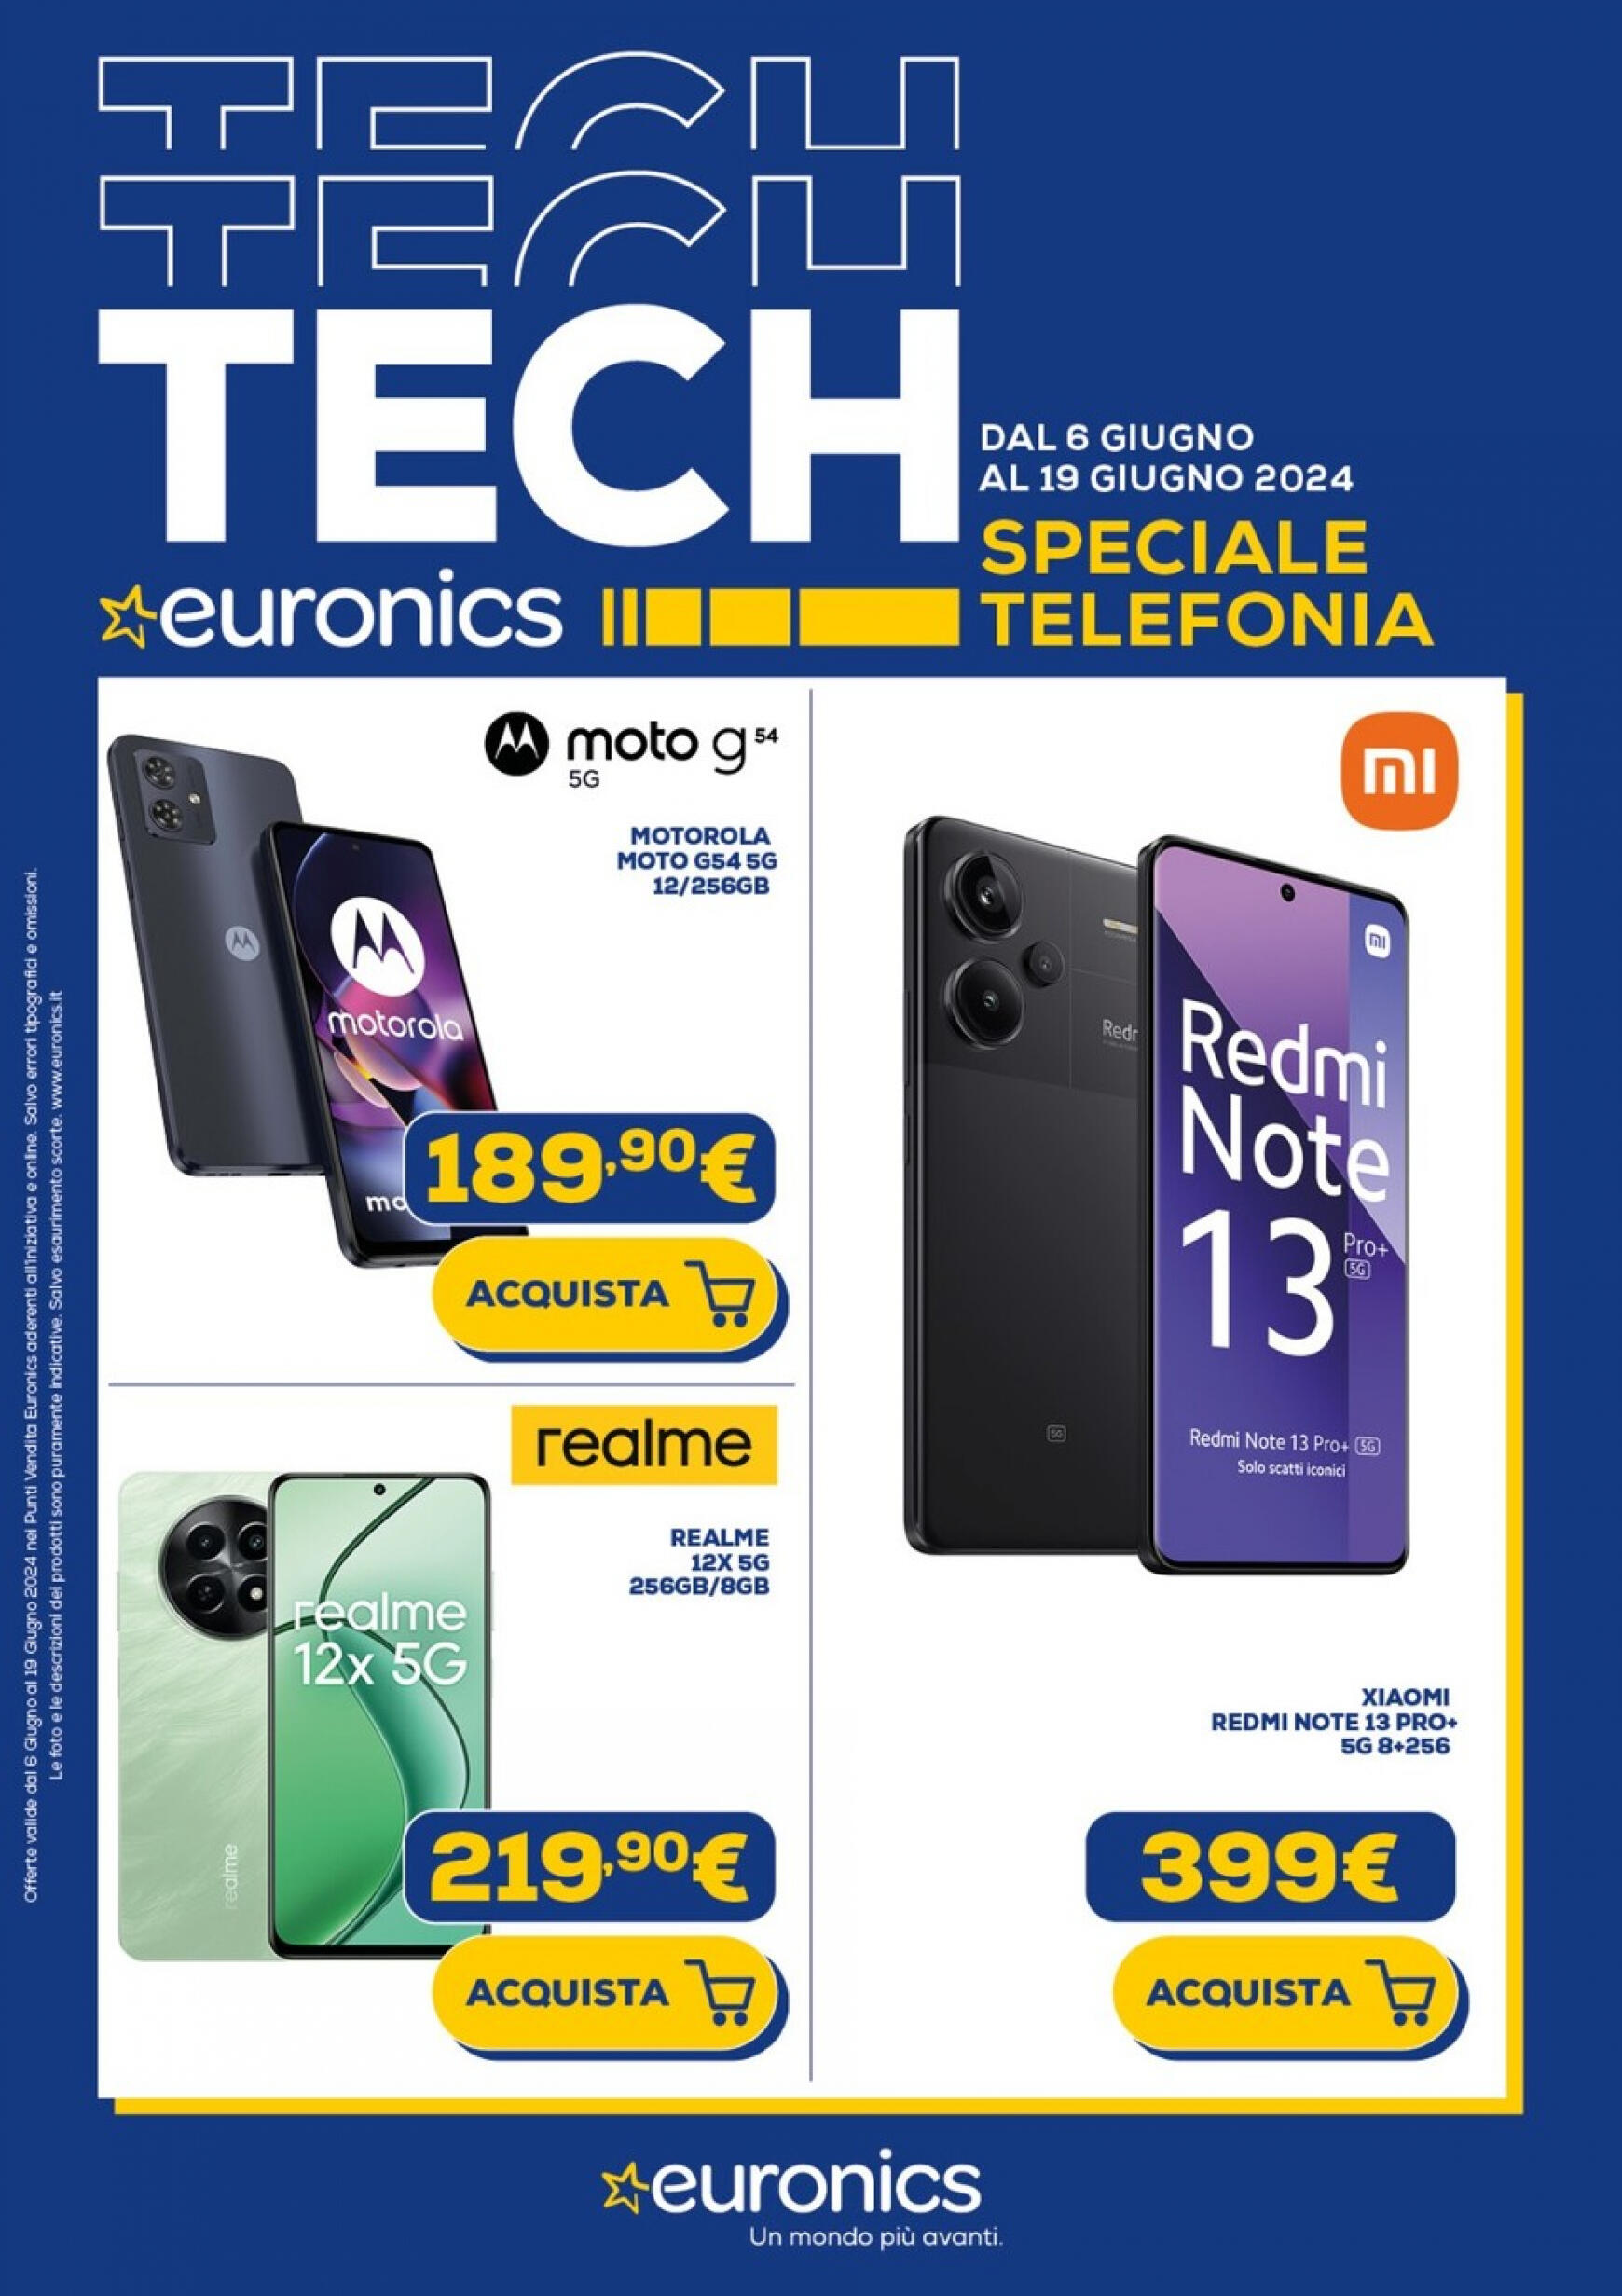 euronics - Nuovo volantino Euronics - Speciale Telefonia 06.06. - 19.06. - page: 1